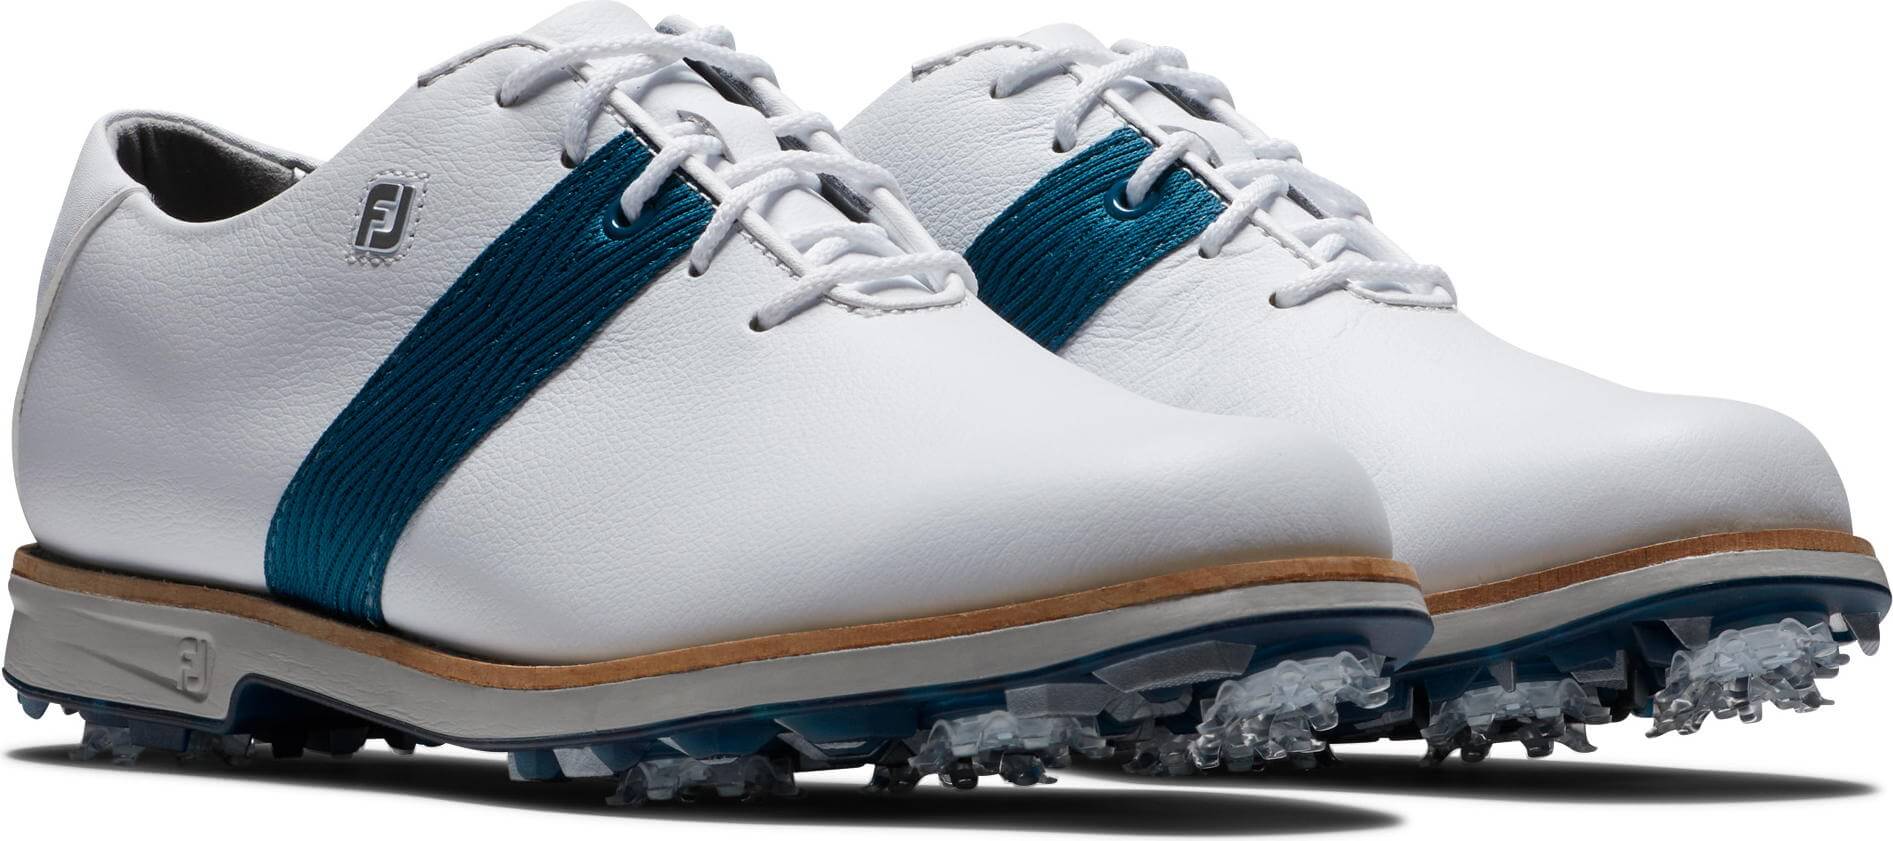 FootJoy Premiere Series Golfschuh, M, white/blue